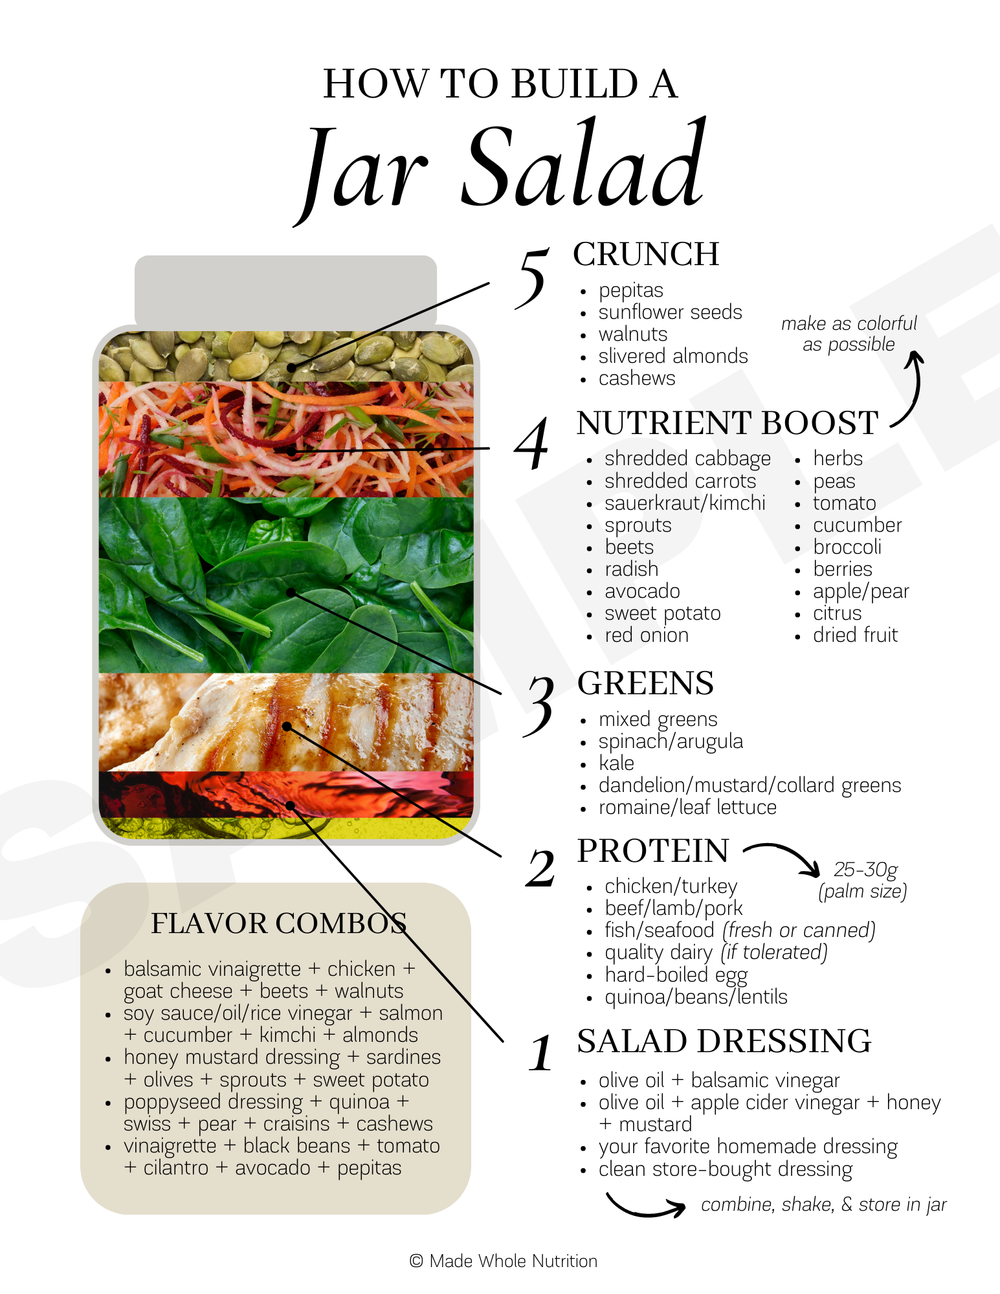 How to Build a Jar Salad